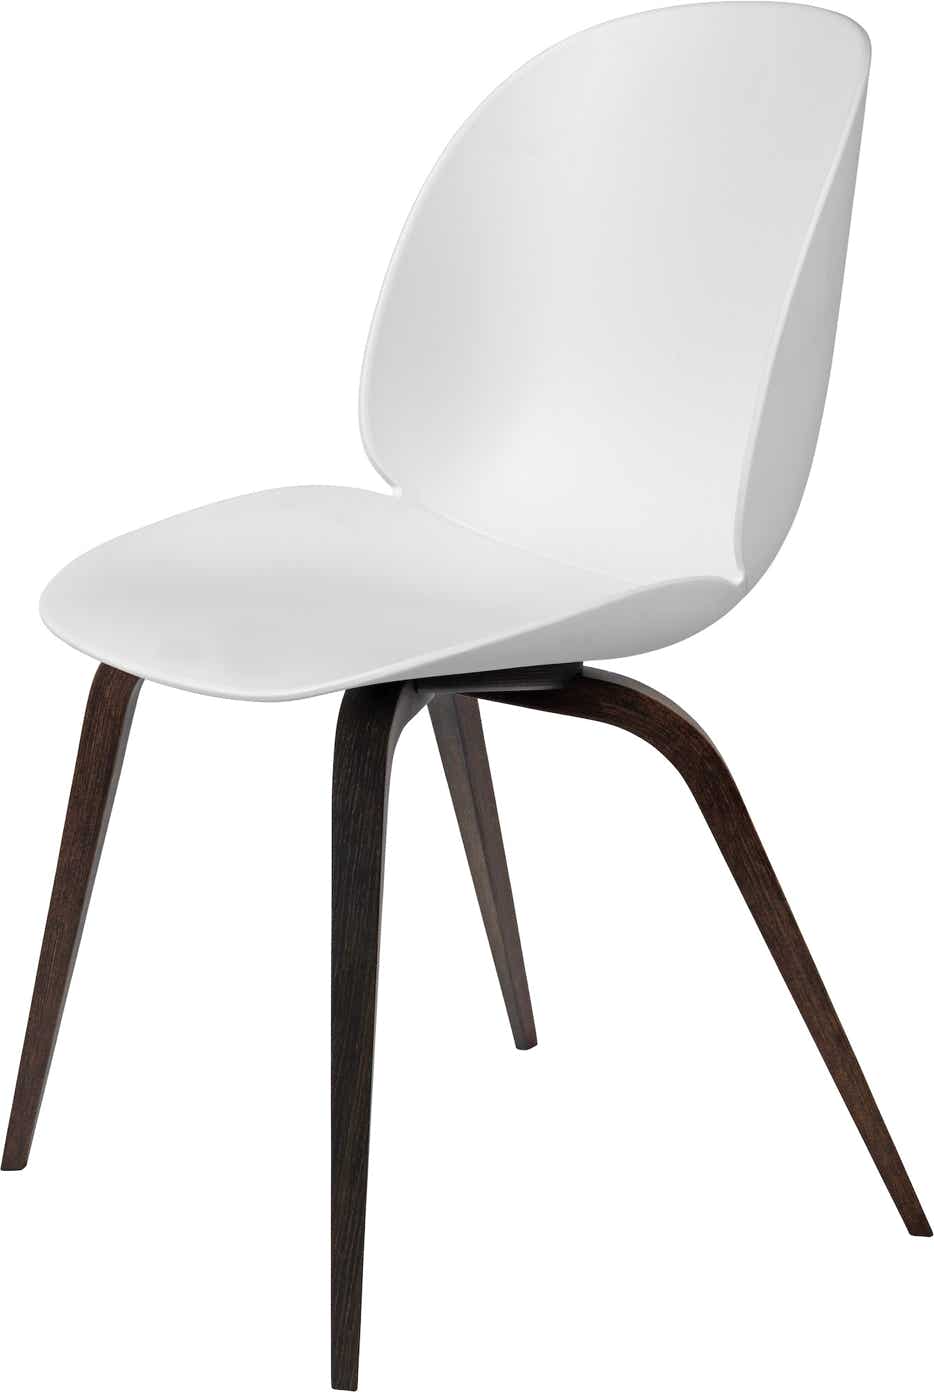 Beetle chair wooden legs GamFratesi, 2017